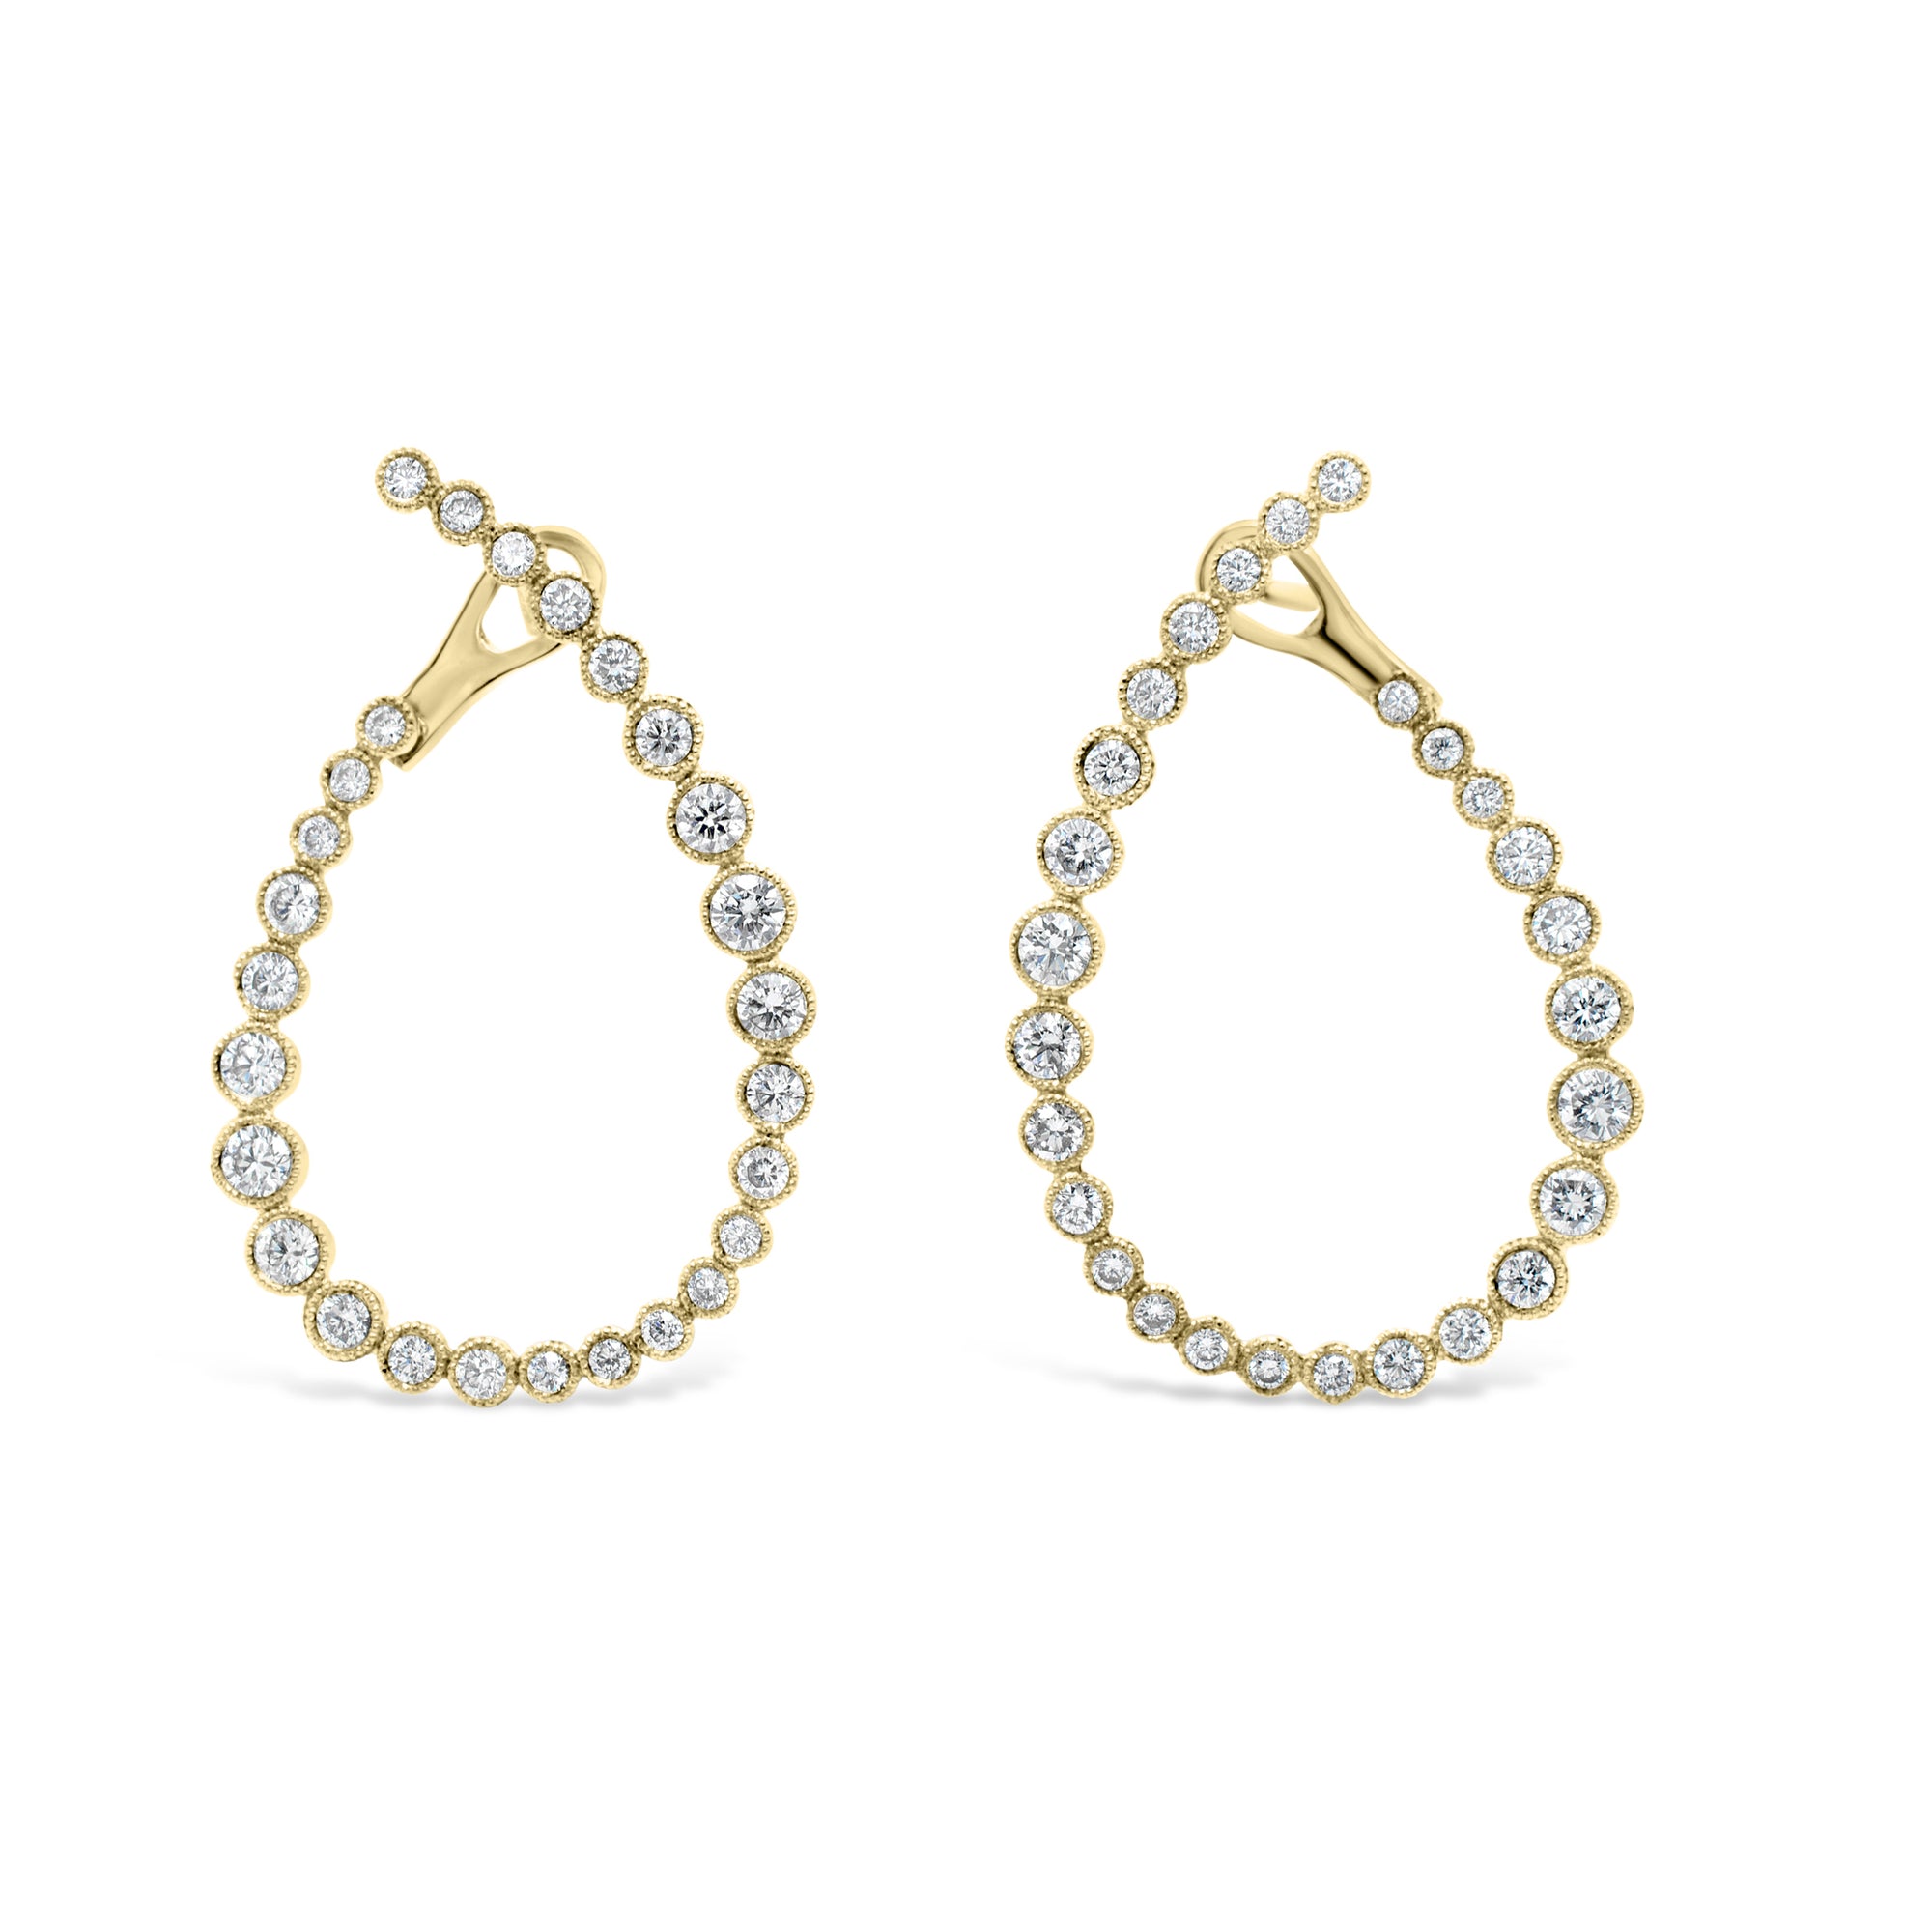 Bezel-Set Diamond Front-Facing Hoop Earrings  - 18K gold weighing 4.08 grams  - 54 round diamonds totaling 1.49 carats